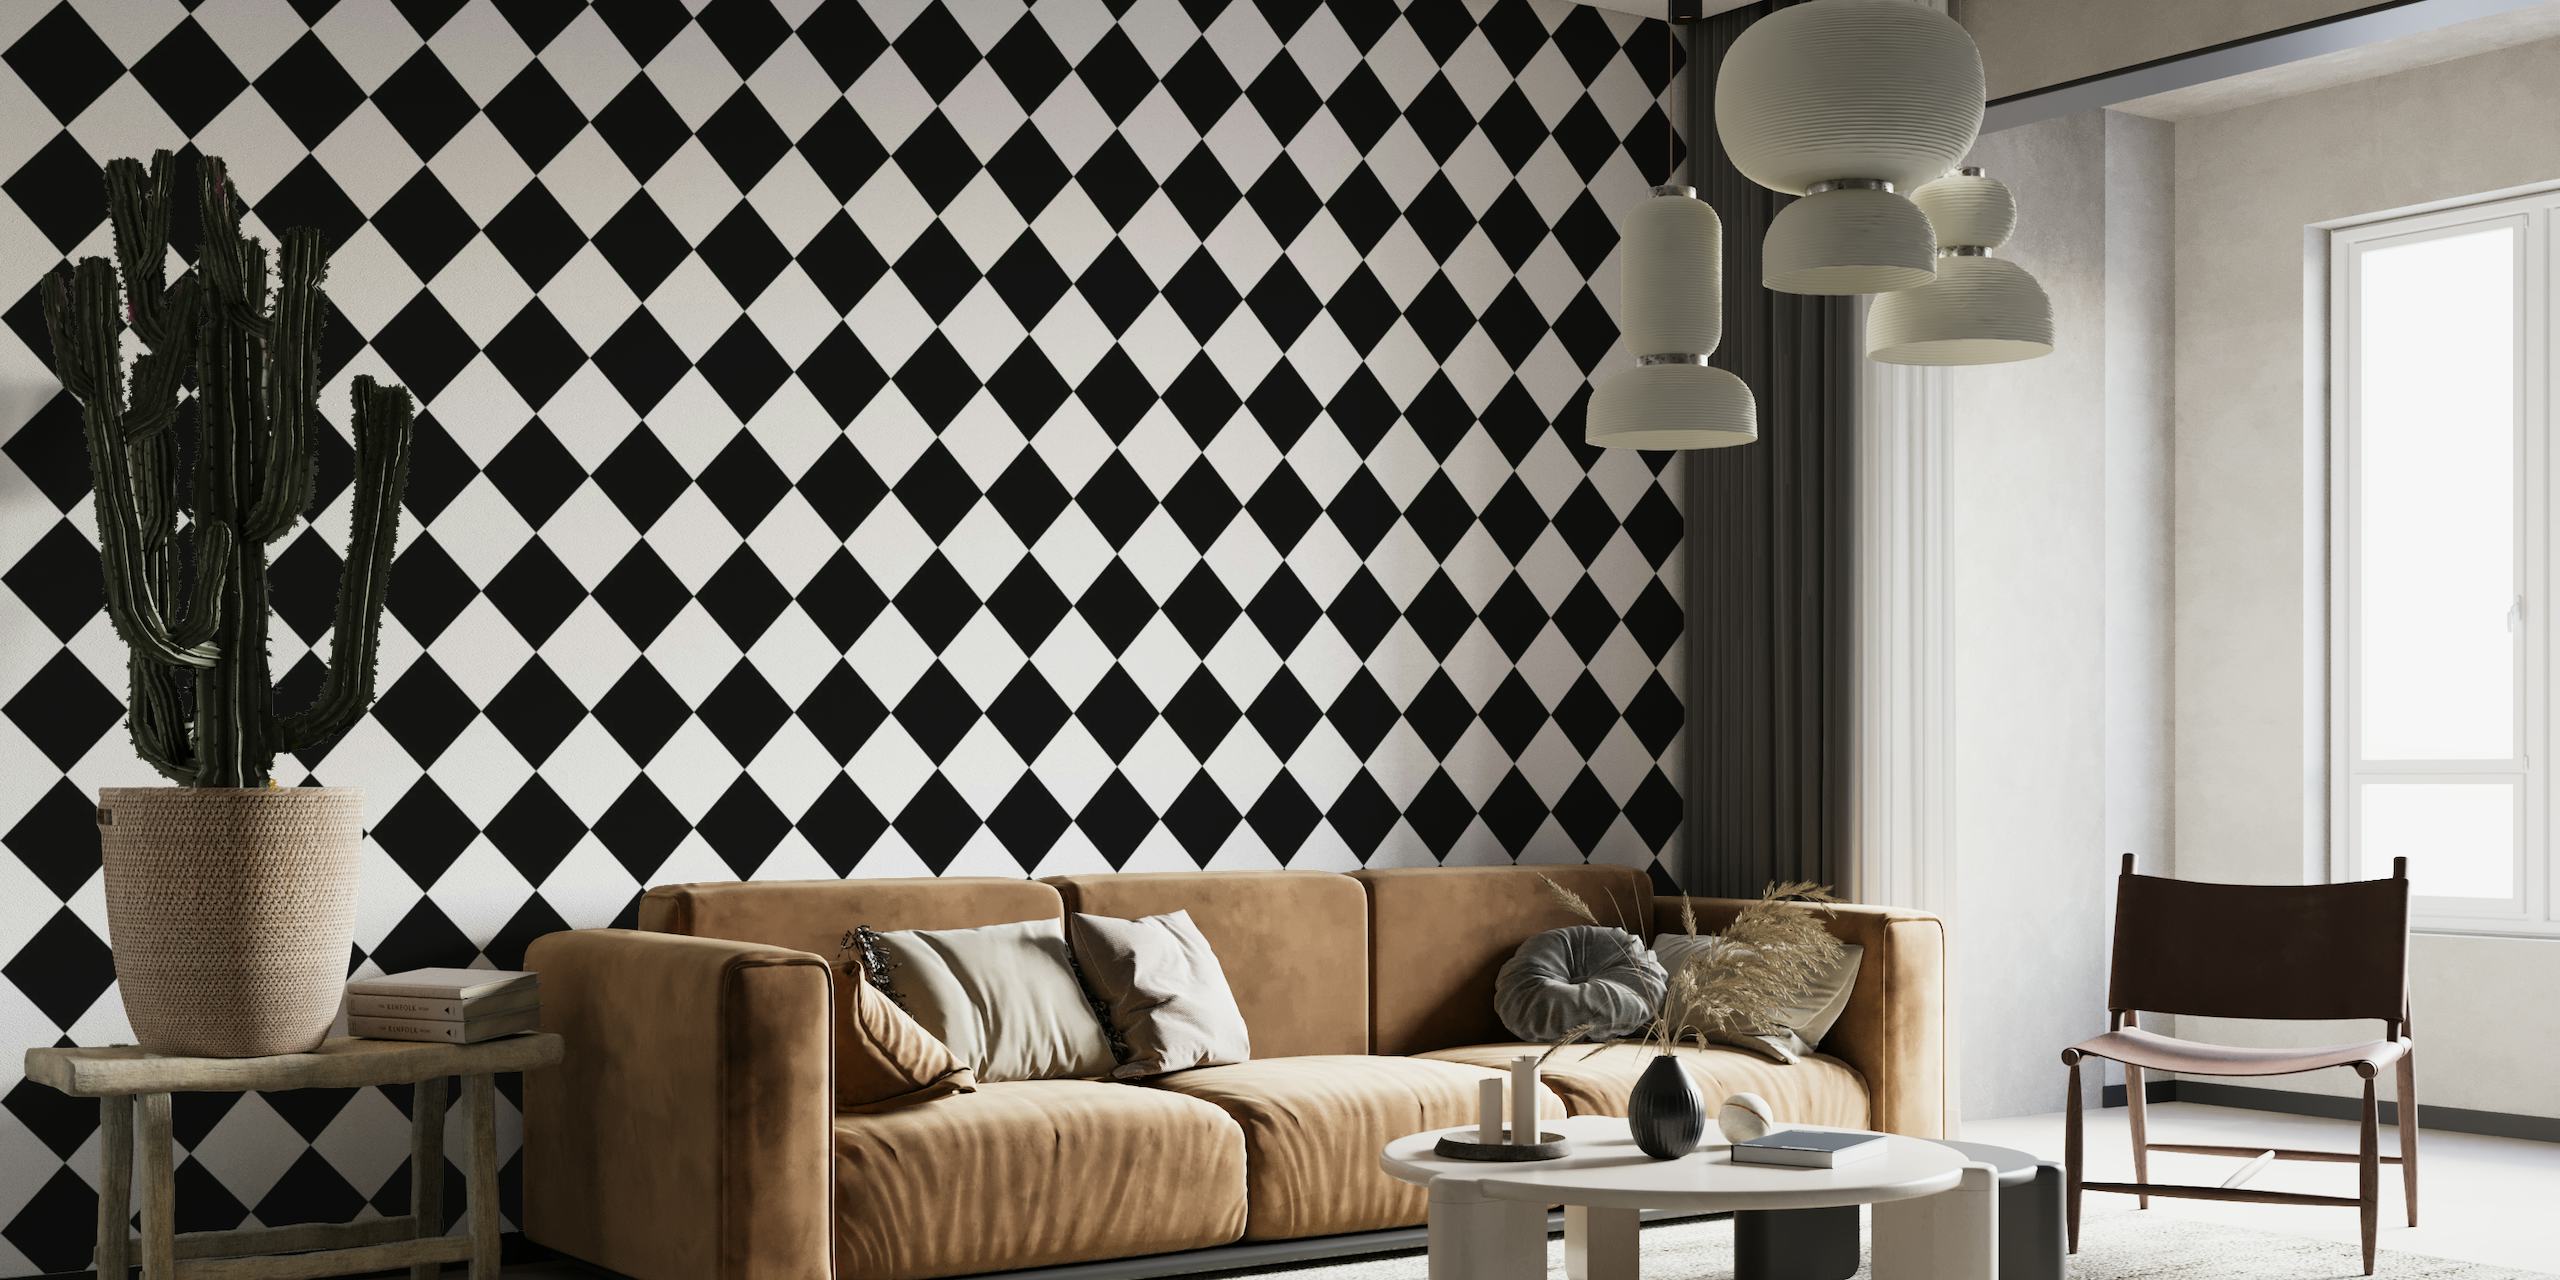 Diagonal Checkerboard Large - Black and White behang